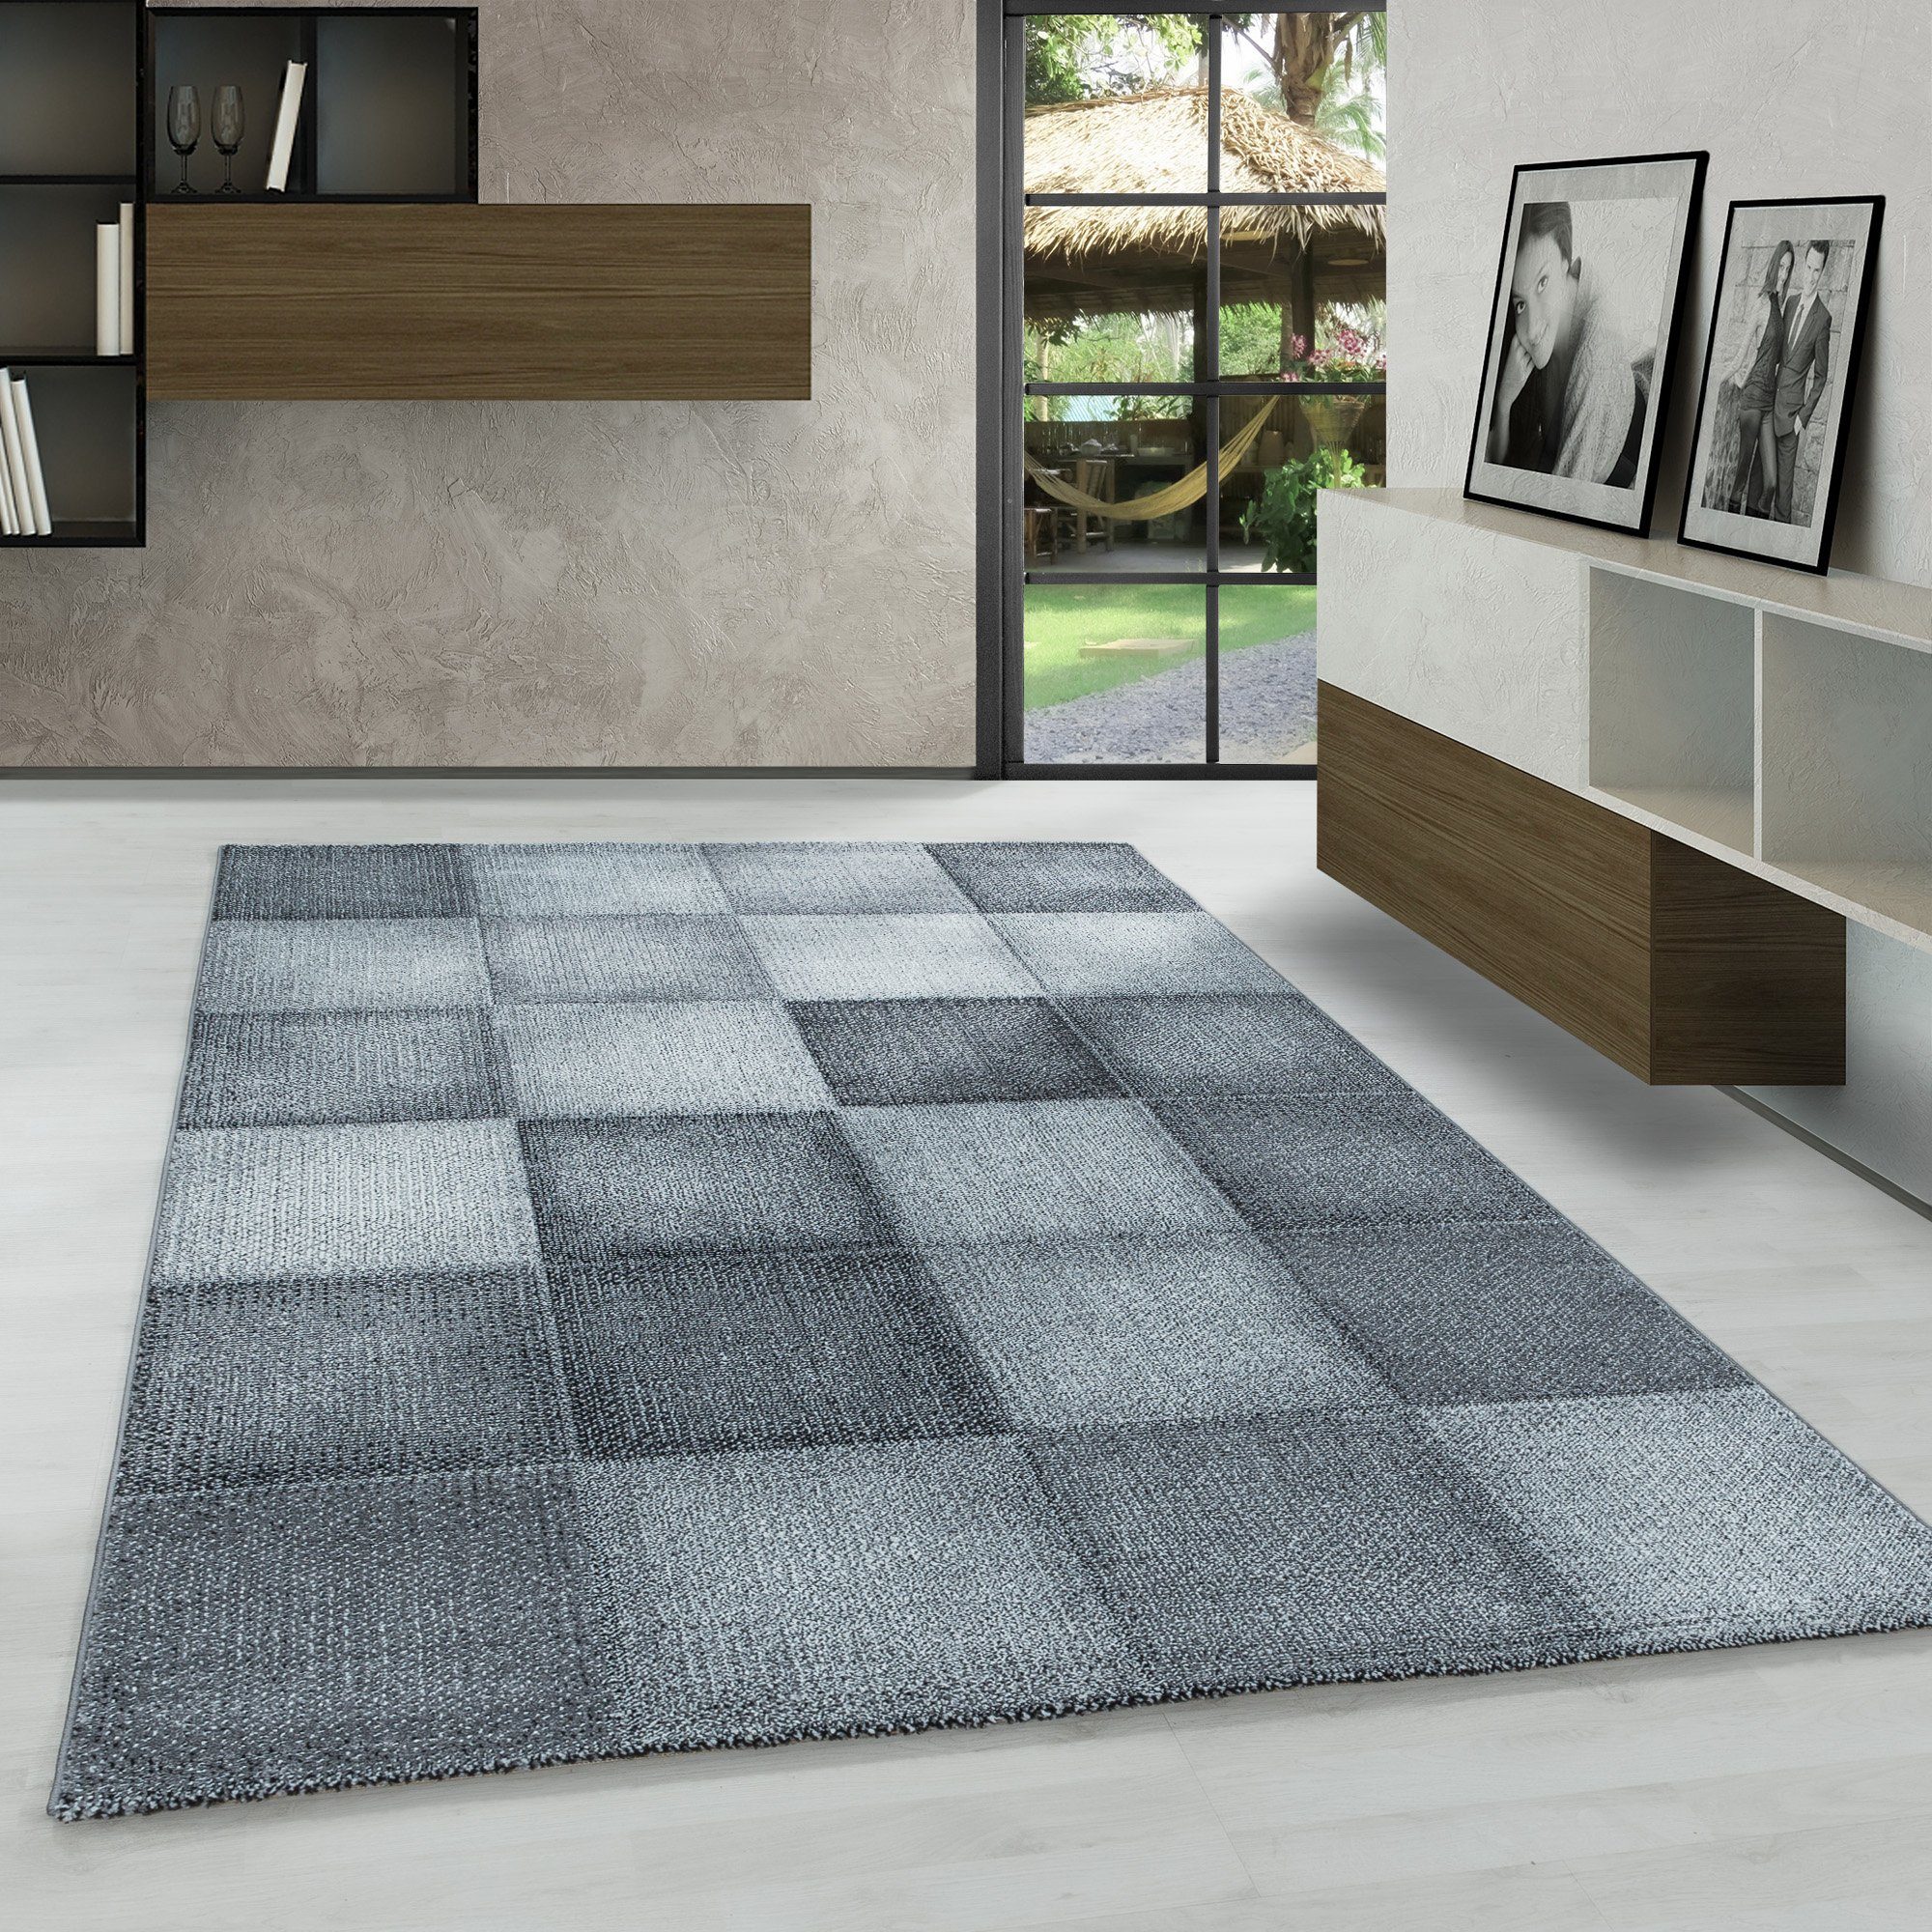 Frisé-Teppich Teppich Kariert Kariert Modern Carpetsale24, Wohnzimmer Kurzflor Design, größen Läufer, 8 mm, Design Höhe: verschidene